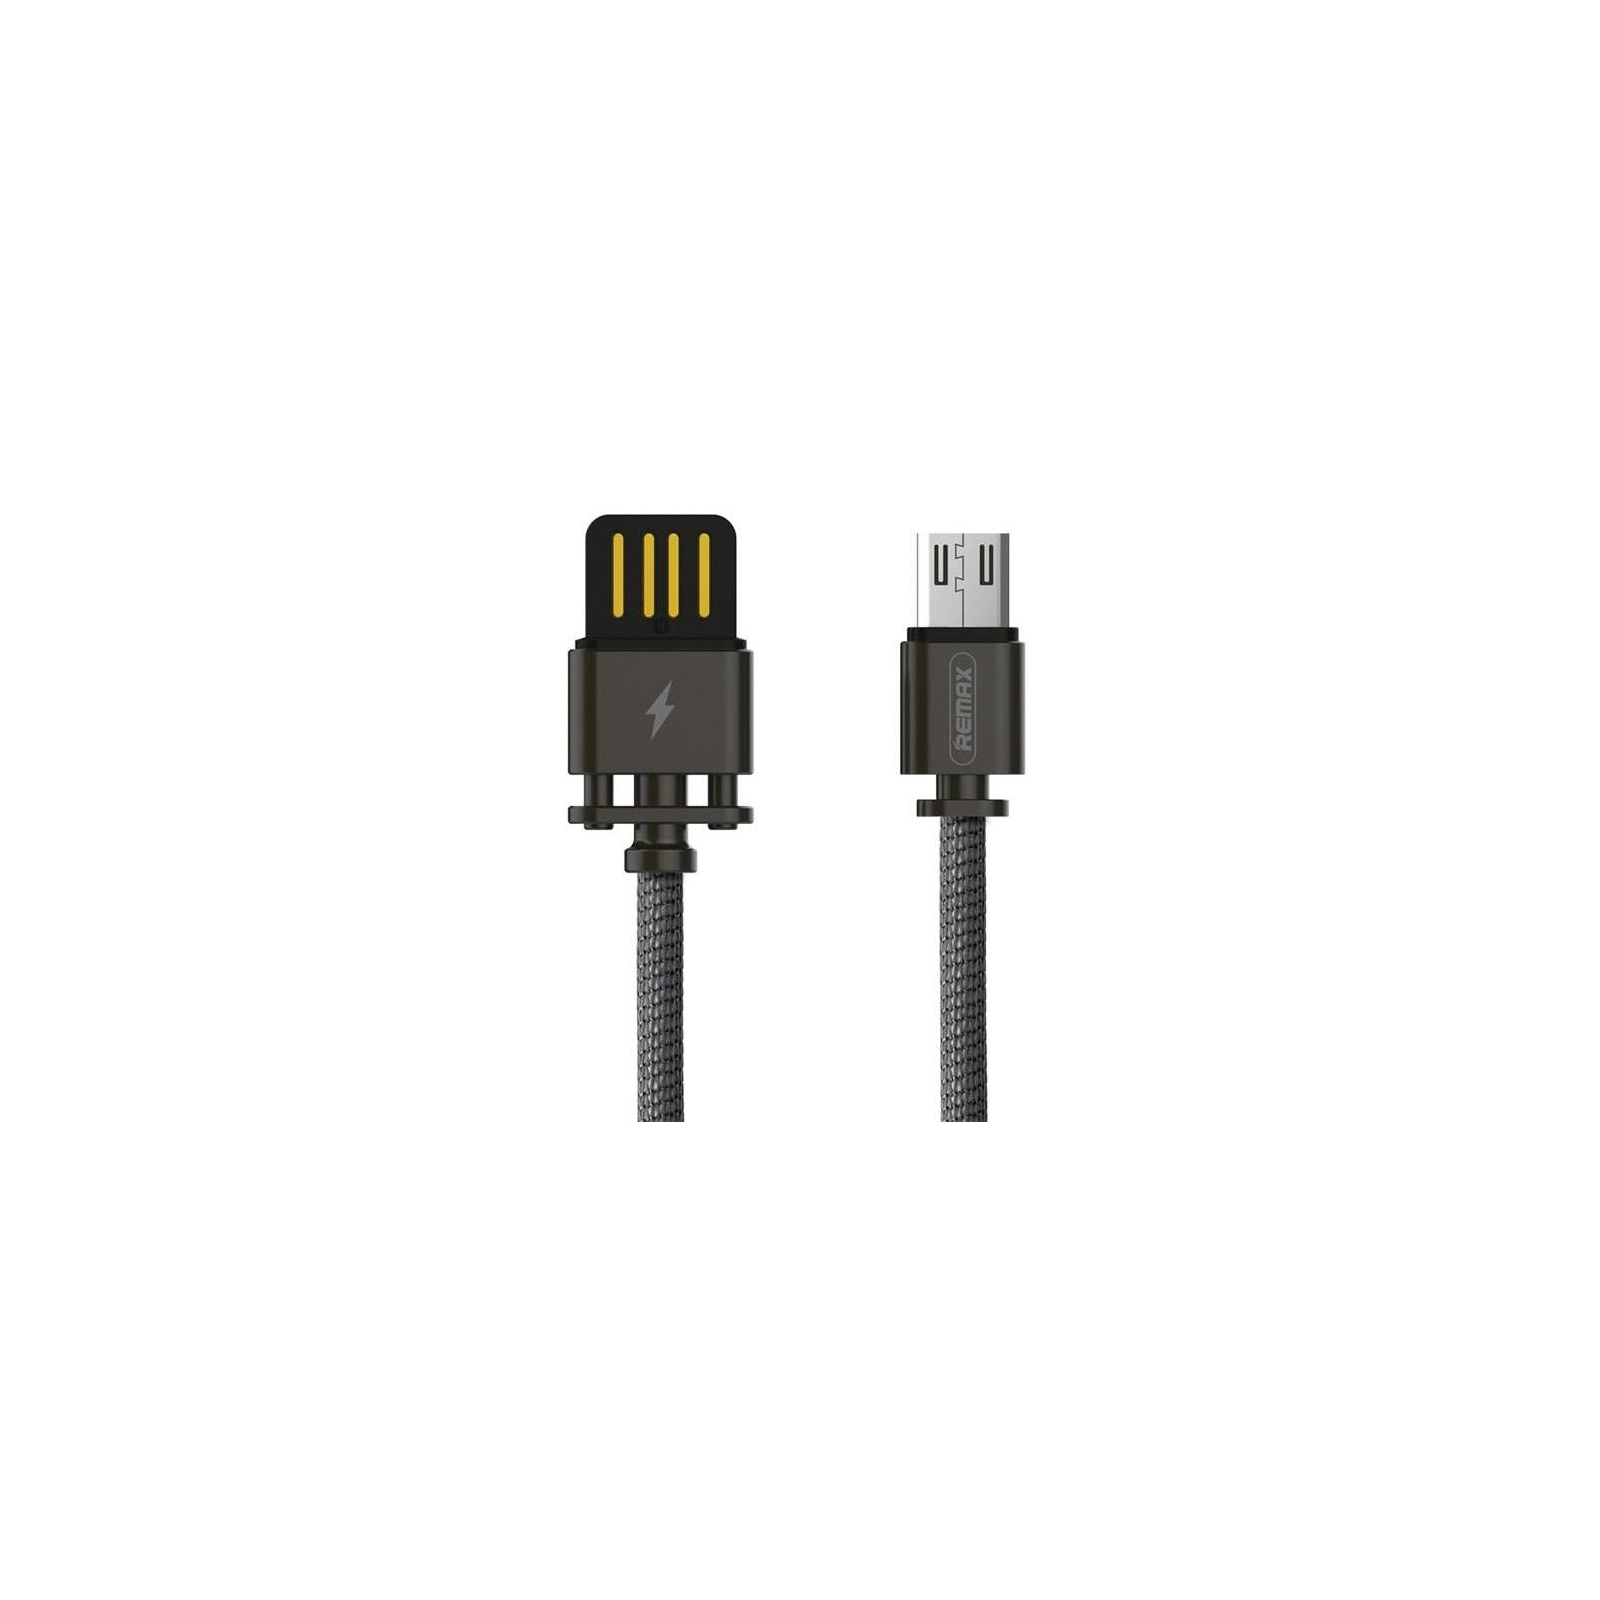 Дата кабель USB 2.0 AM to Micro 5P 1.0m Dominator Fast black Remax (RC-064M-BLACK)